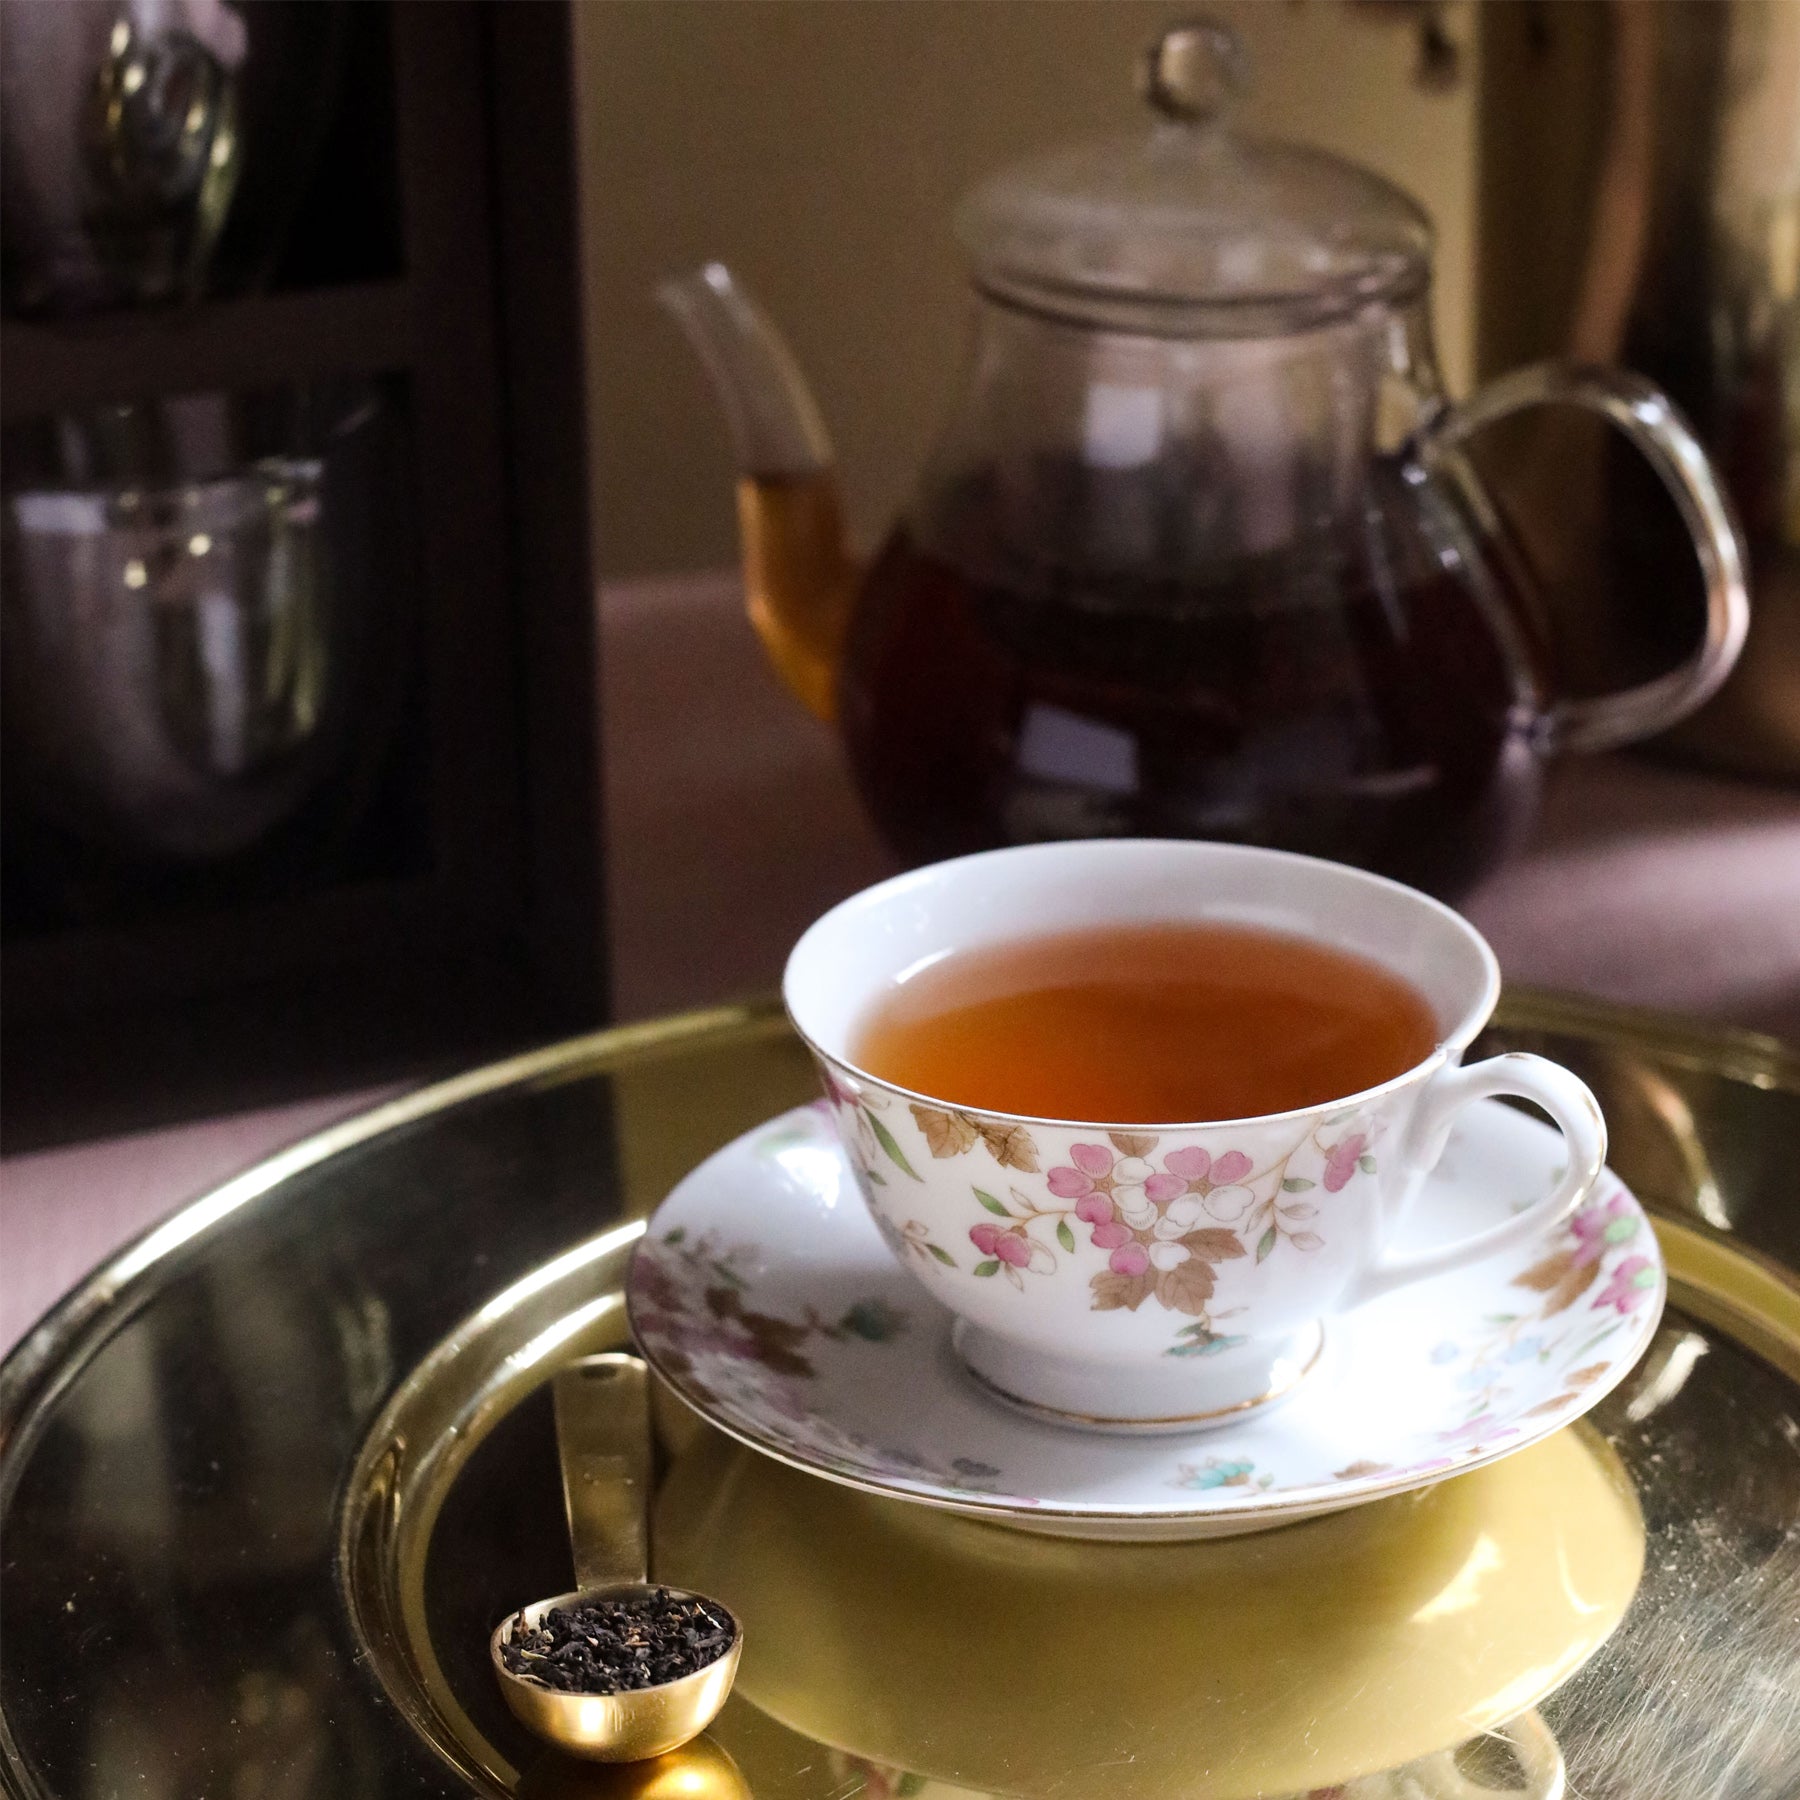 Heritage of India Tea Collection - Couples Delight (Premium Indian Black Tea Range)